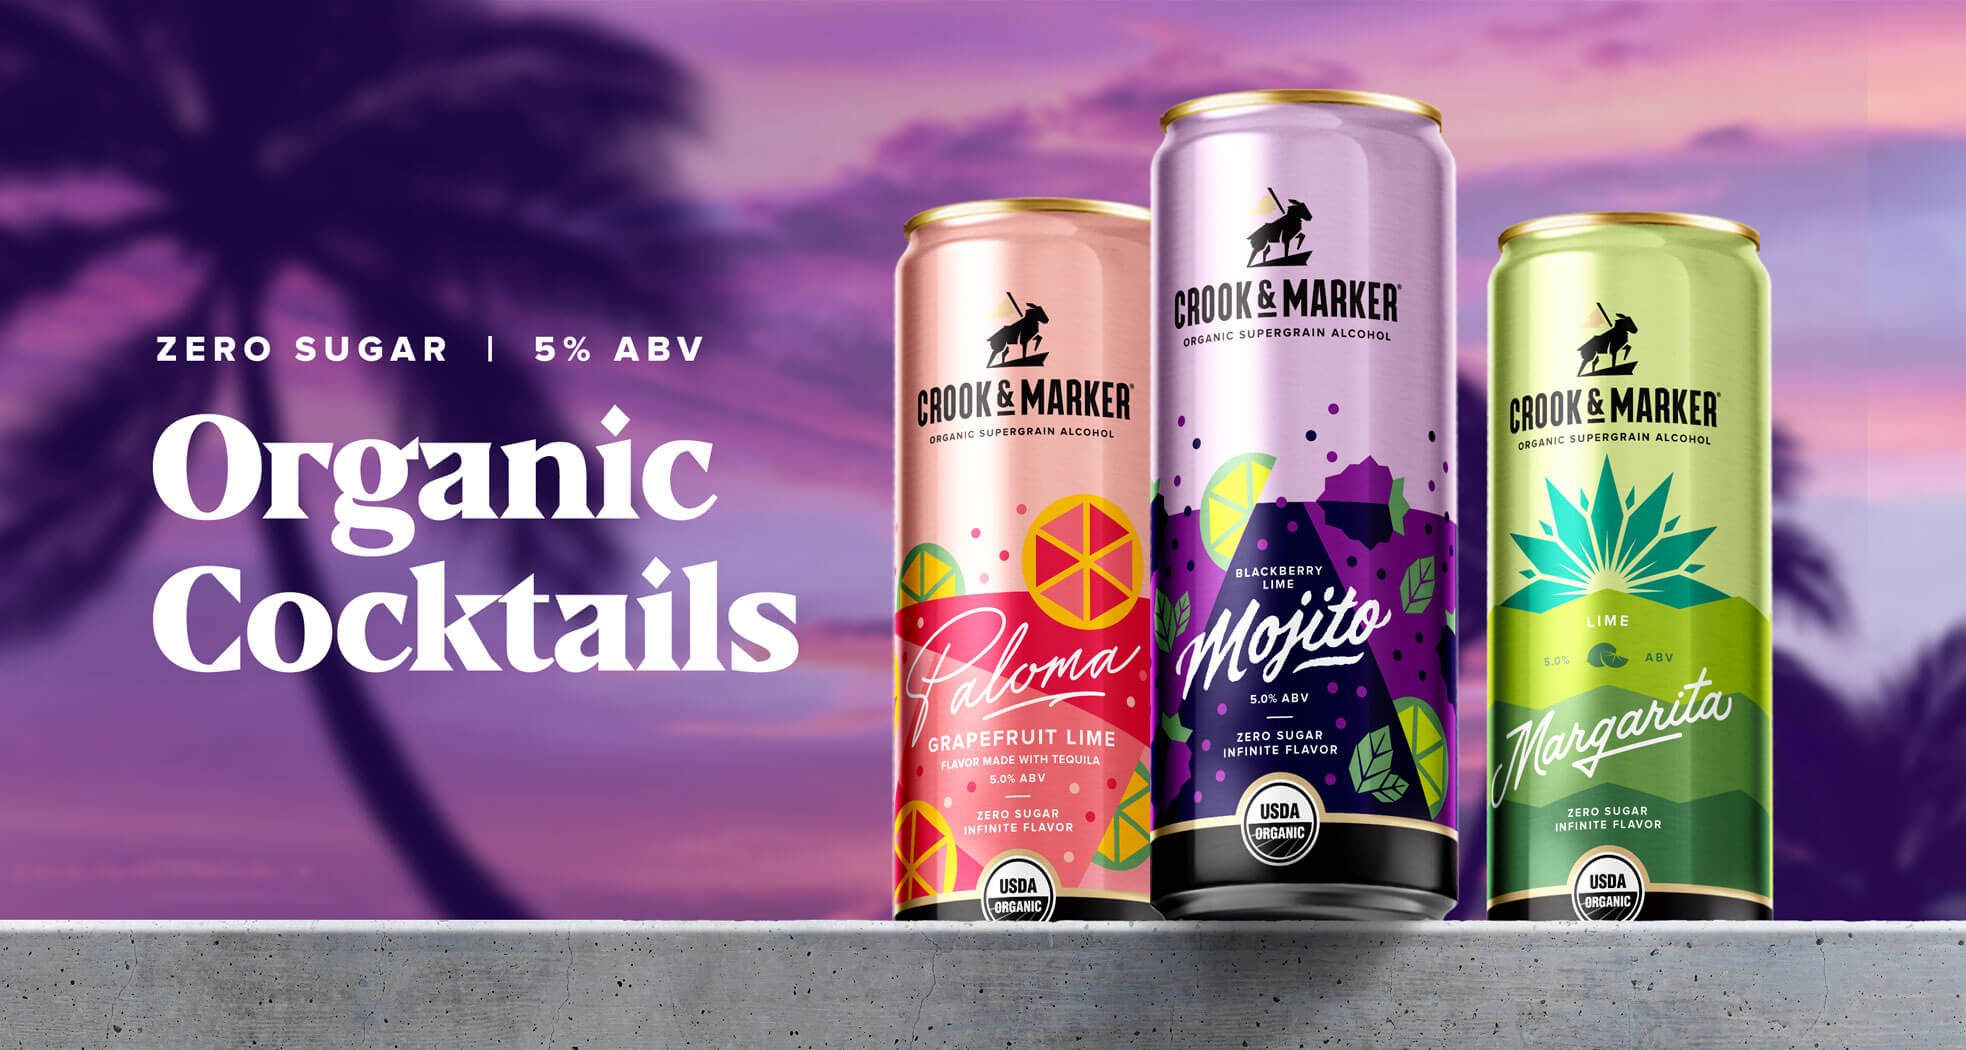 Crook & Marker - Organic Cocktails